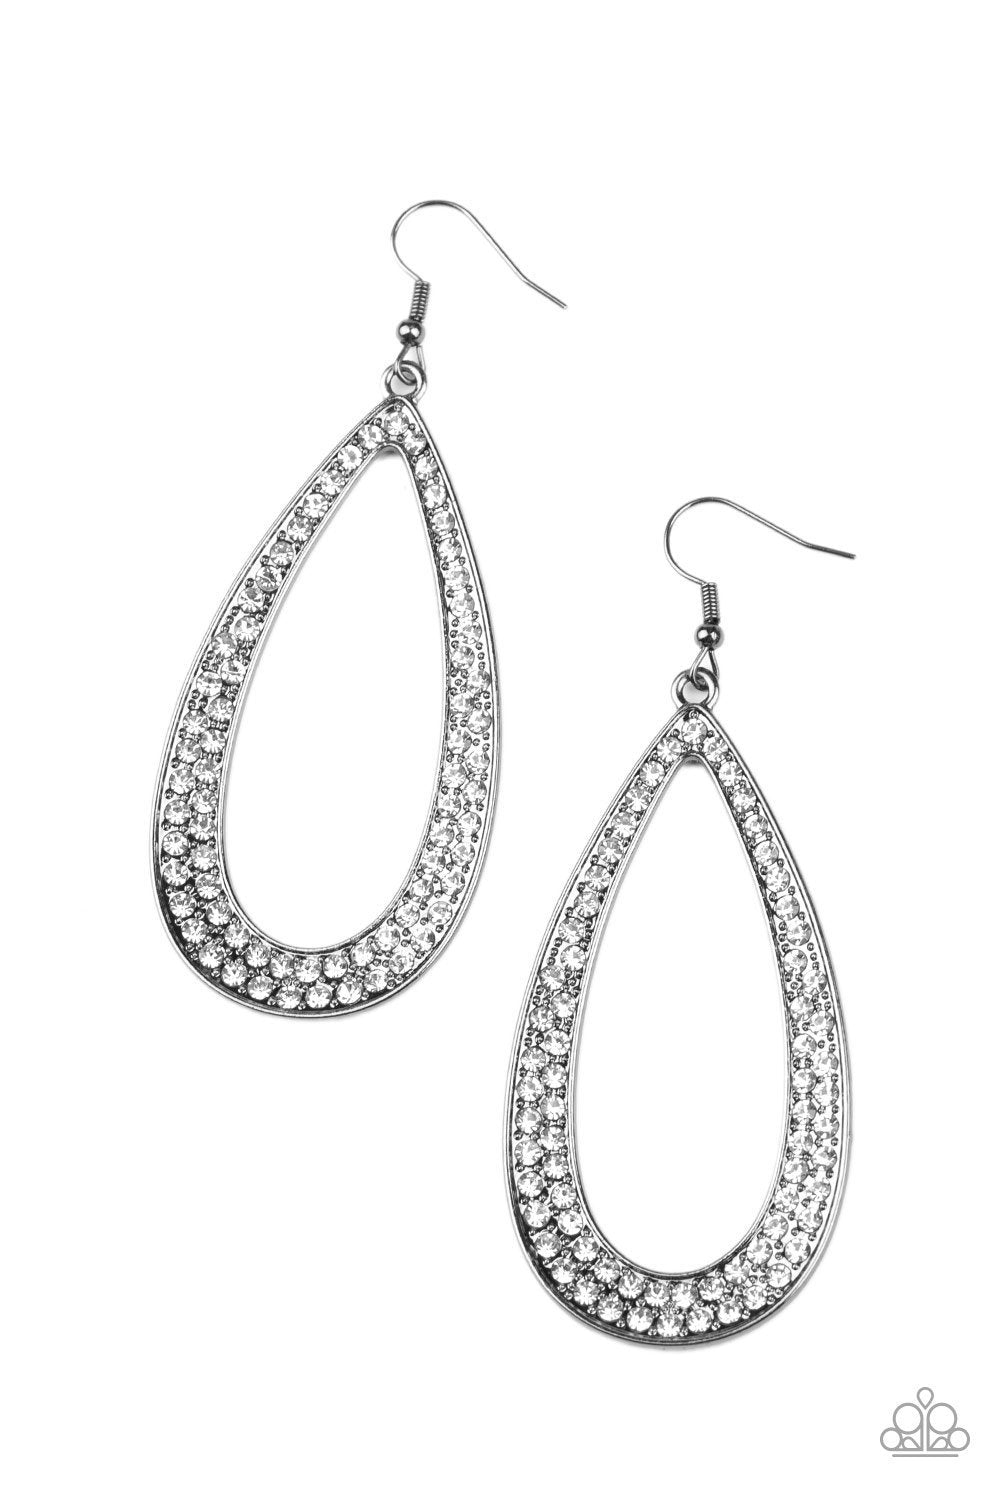 Diamond Distraction Gunmetal Black and White Rhinestone Earrings - Paparazzi Accessories - lightbox -CarasShop.com - $5 Jewelry by Cara Jewels